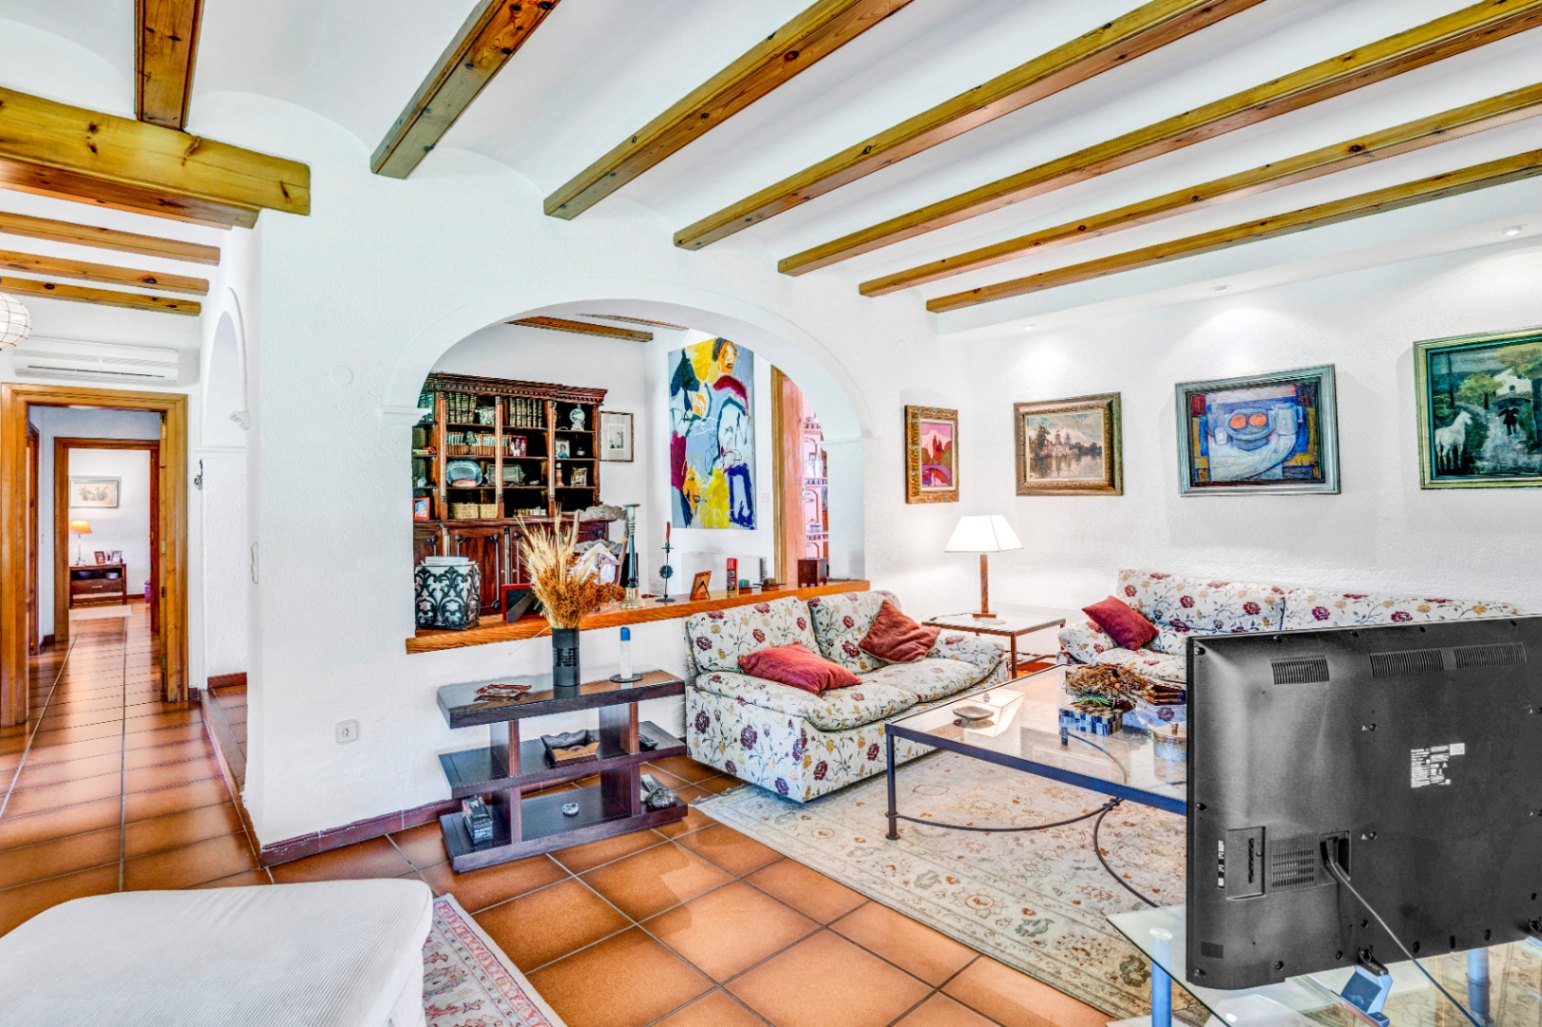 Villa te koop in Tosalet de Javea - Groot perceel van 1950m2 - 5 slaapkamers en alles op één verdieping